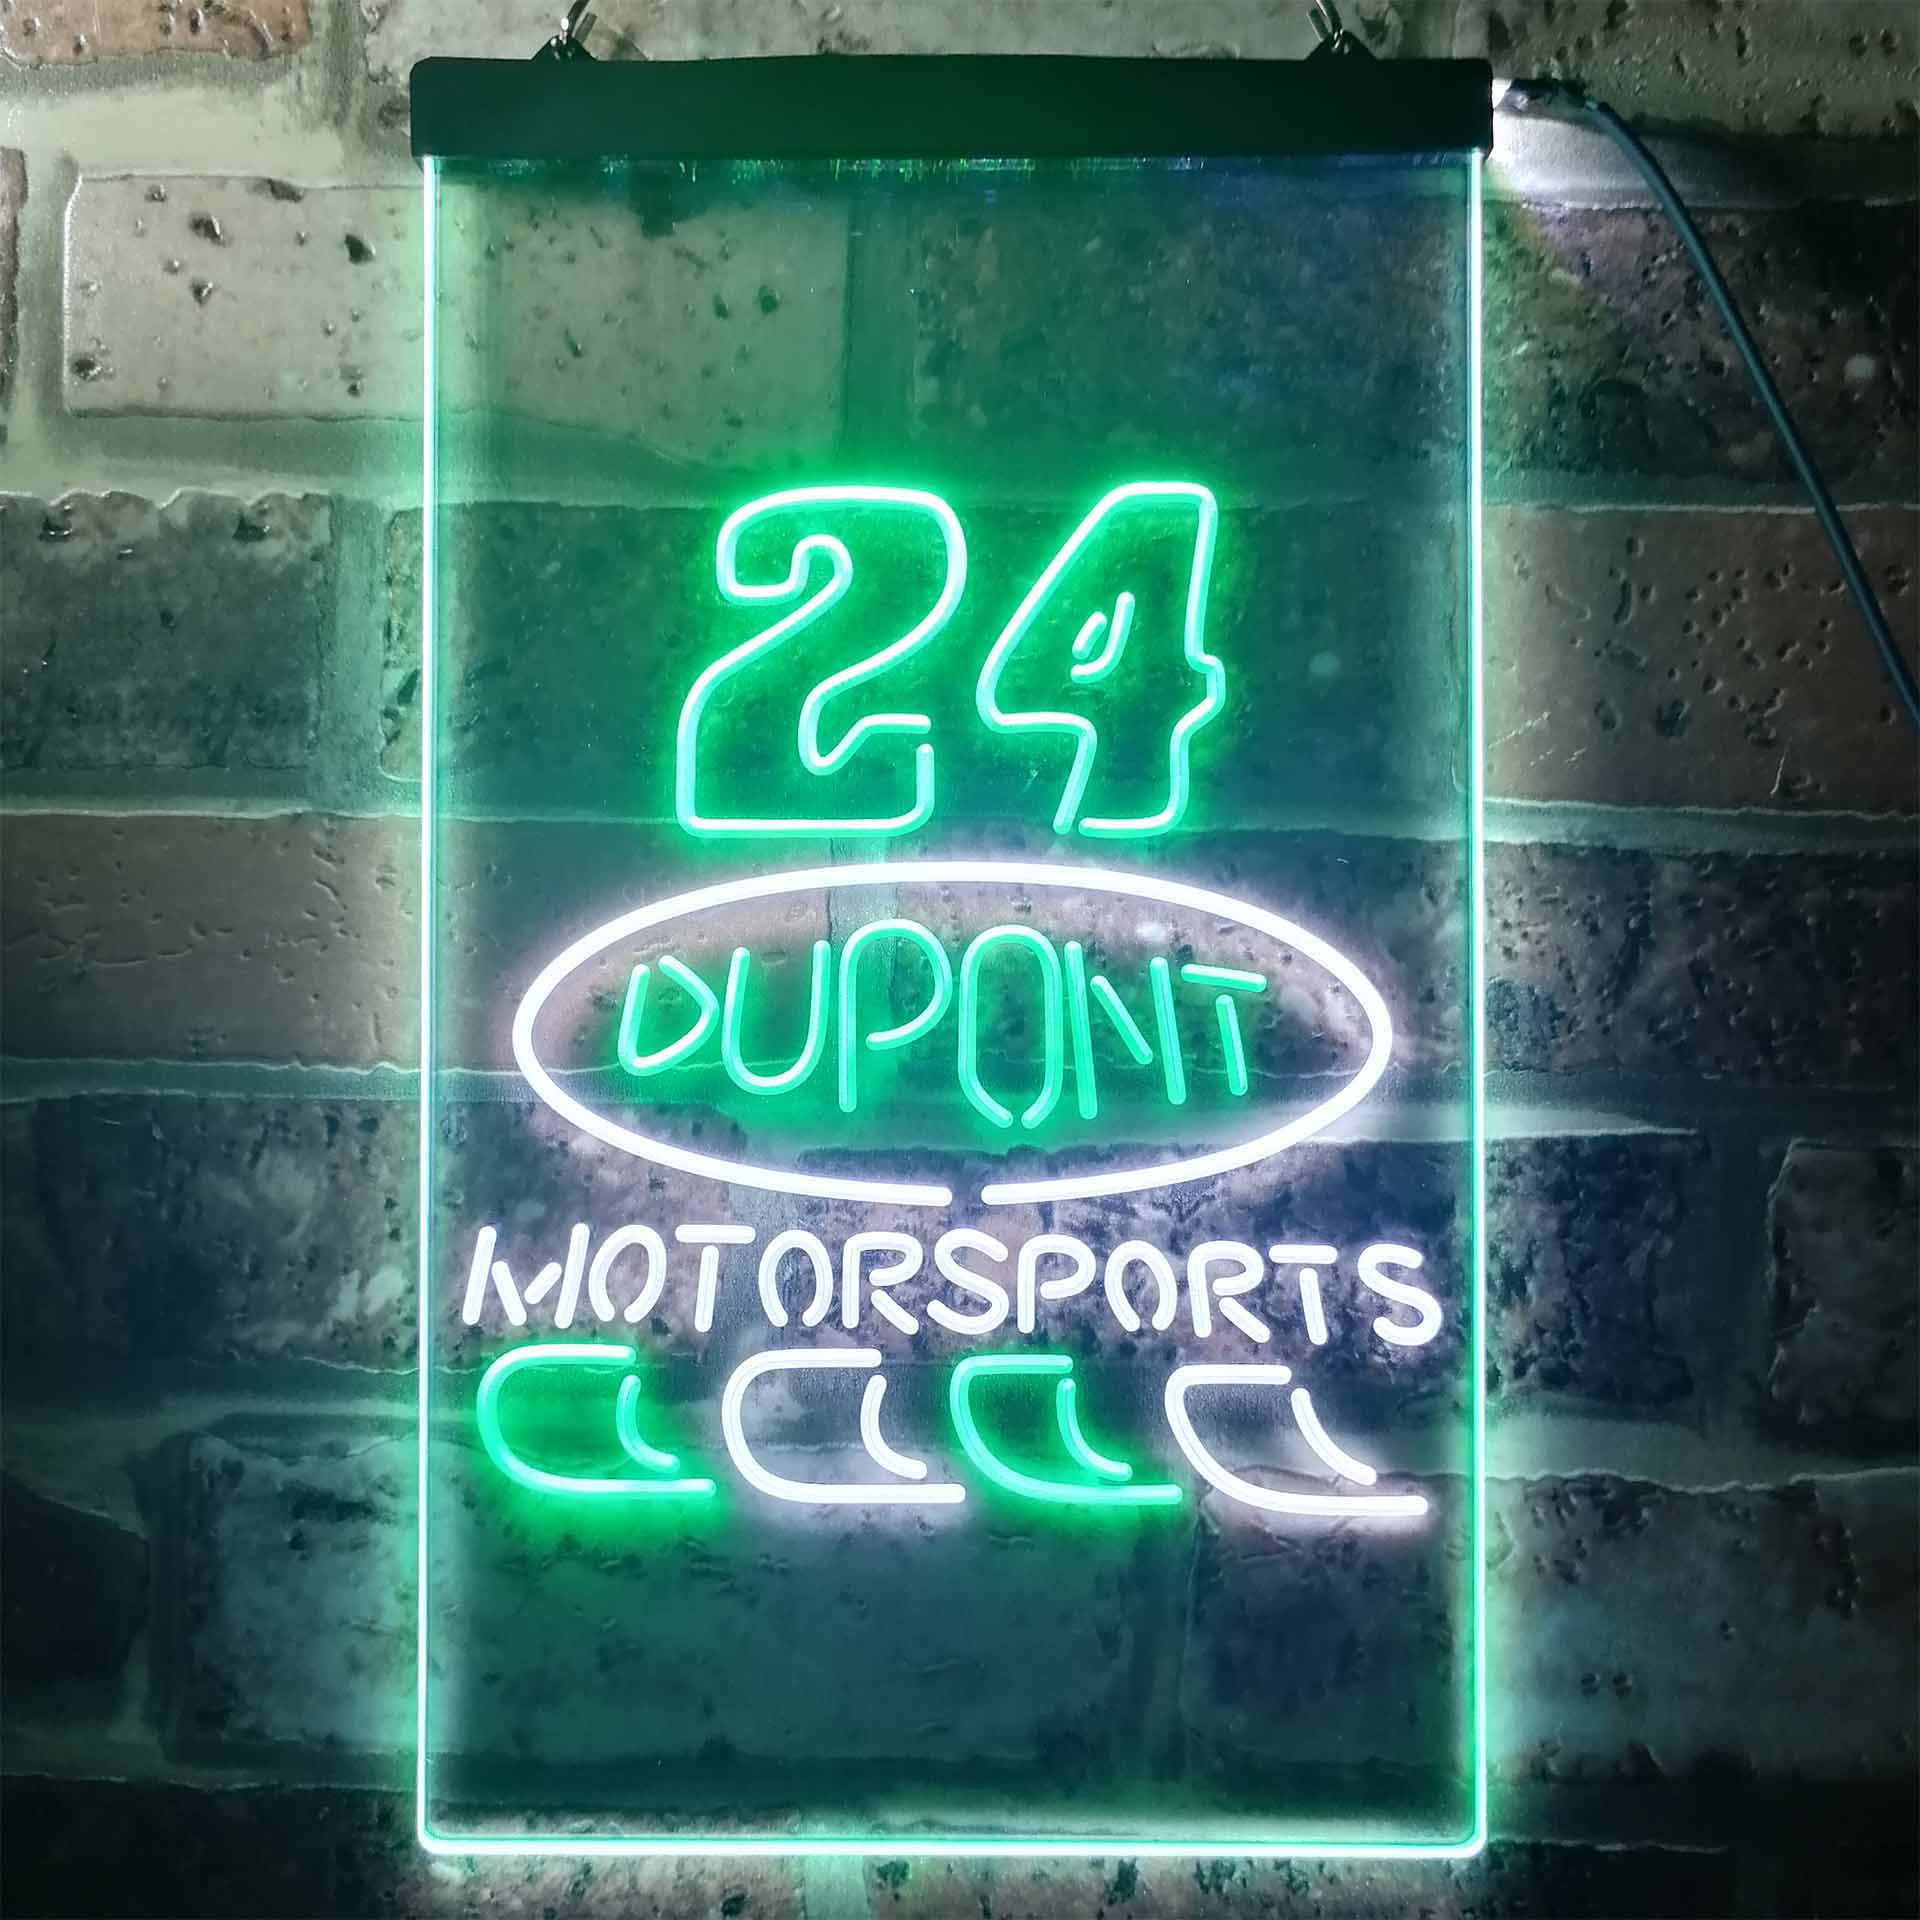 Motorsports #24 Dupont Garage Neon-Like LED Sign